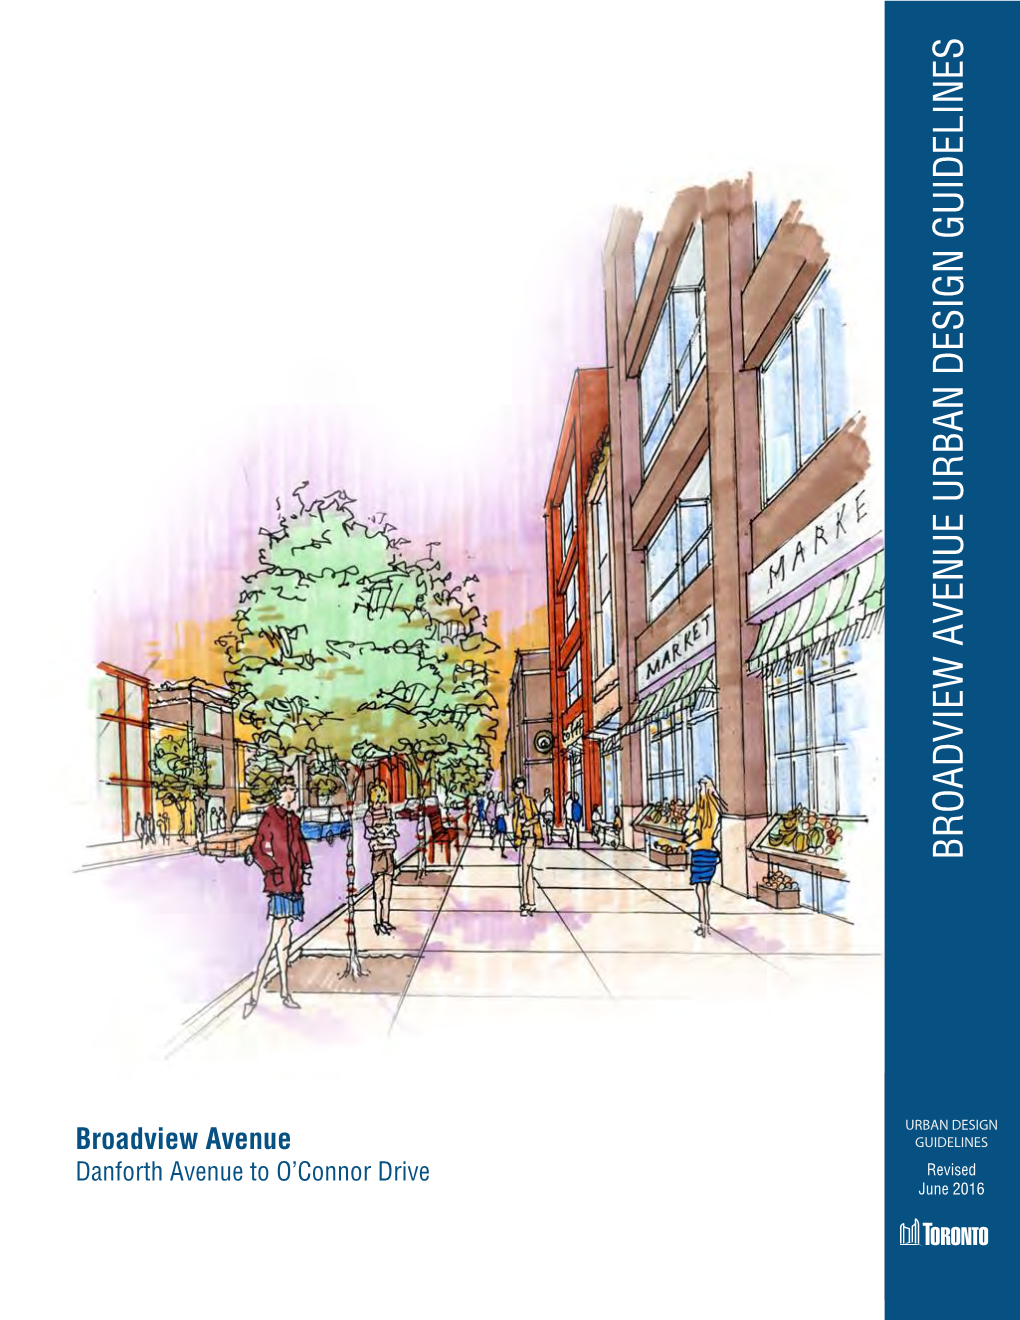 Broadview Avenue Urban Design Guidelines